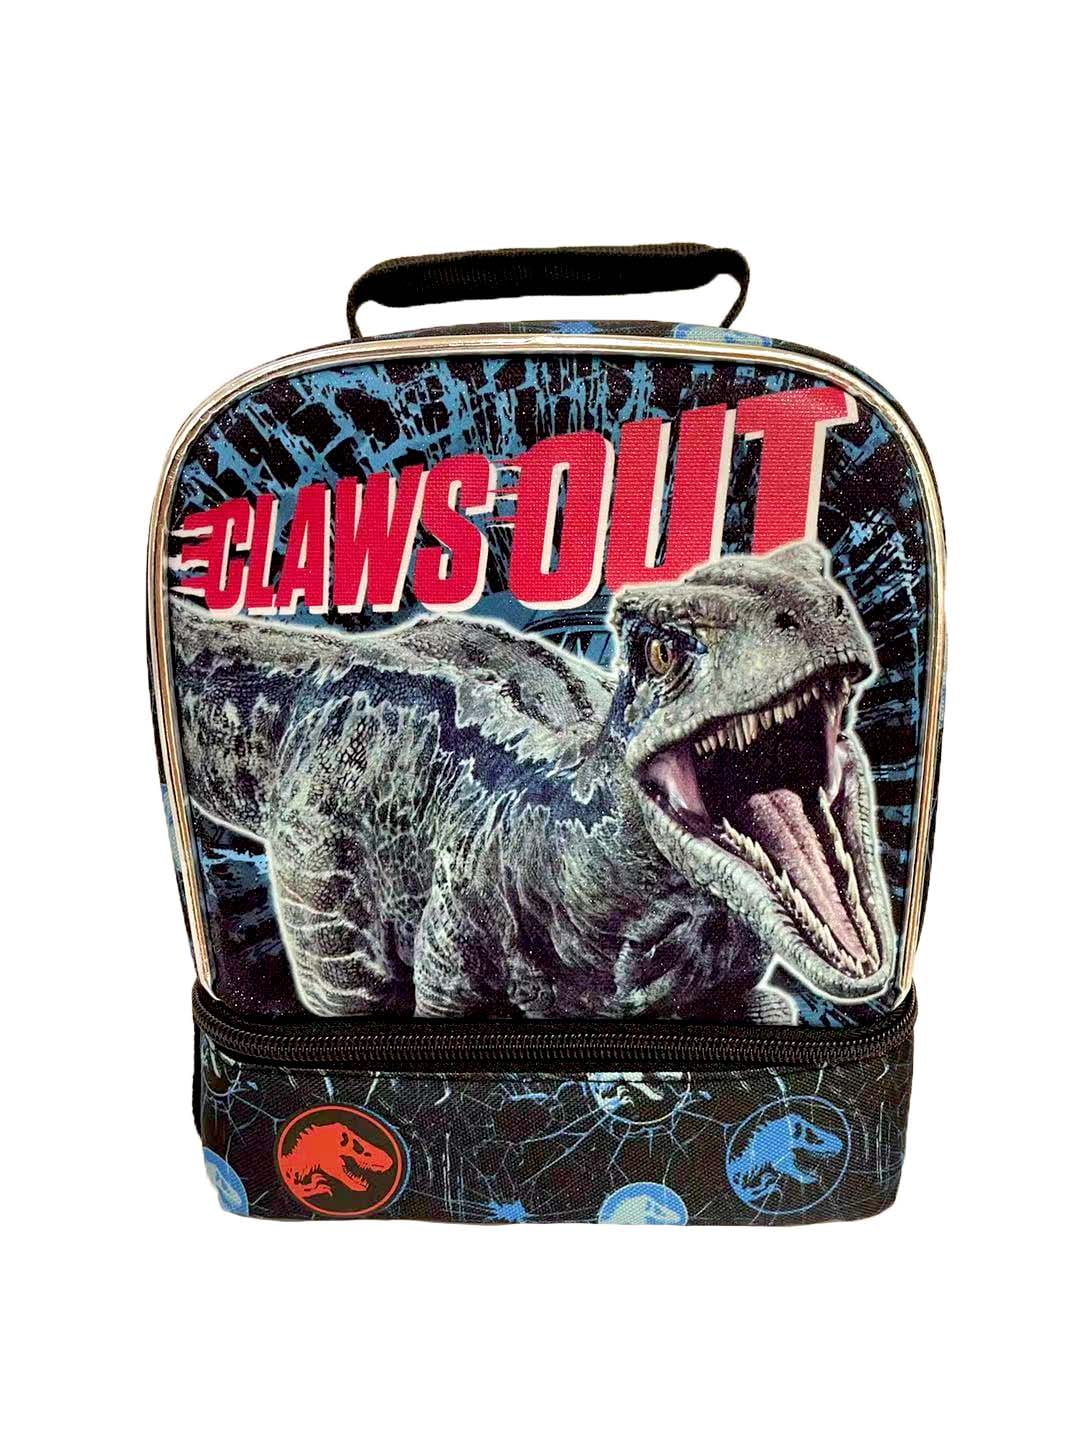 Jurassic World Dinasaur Print Boys Backpack Lunch Bag Tote Pen Case Kid Gift Lot 